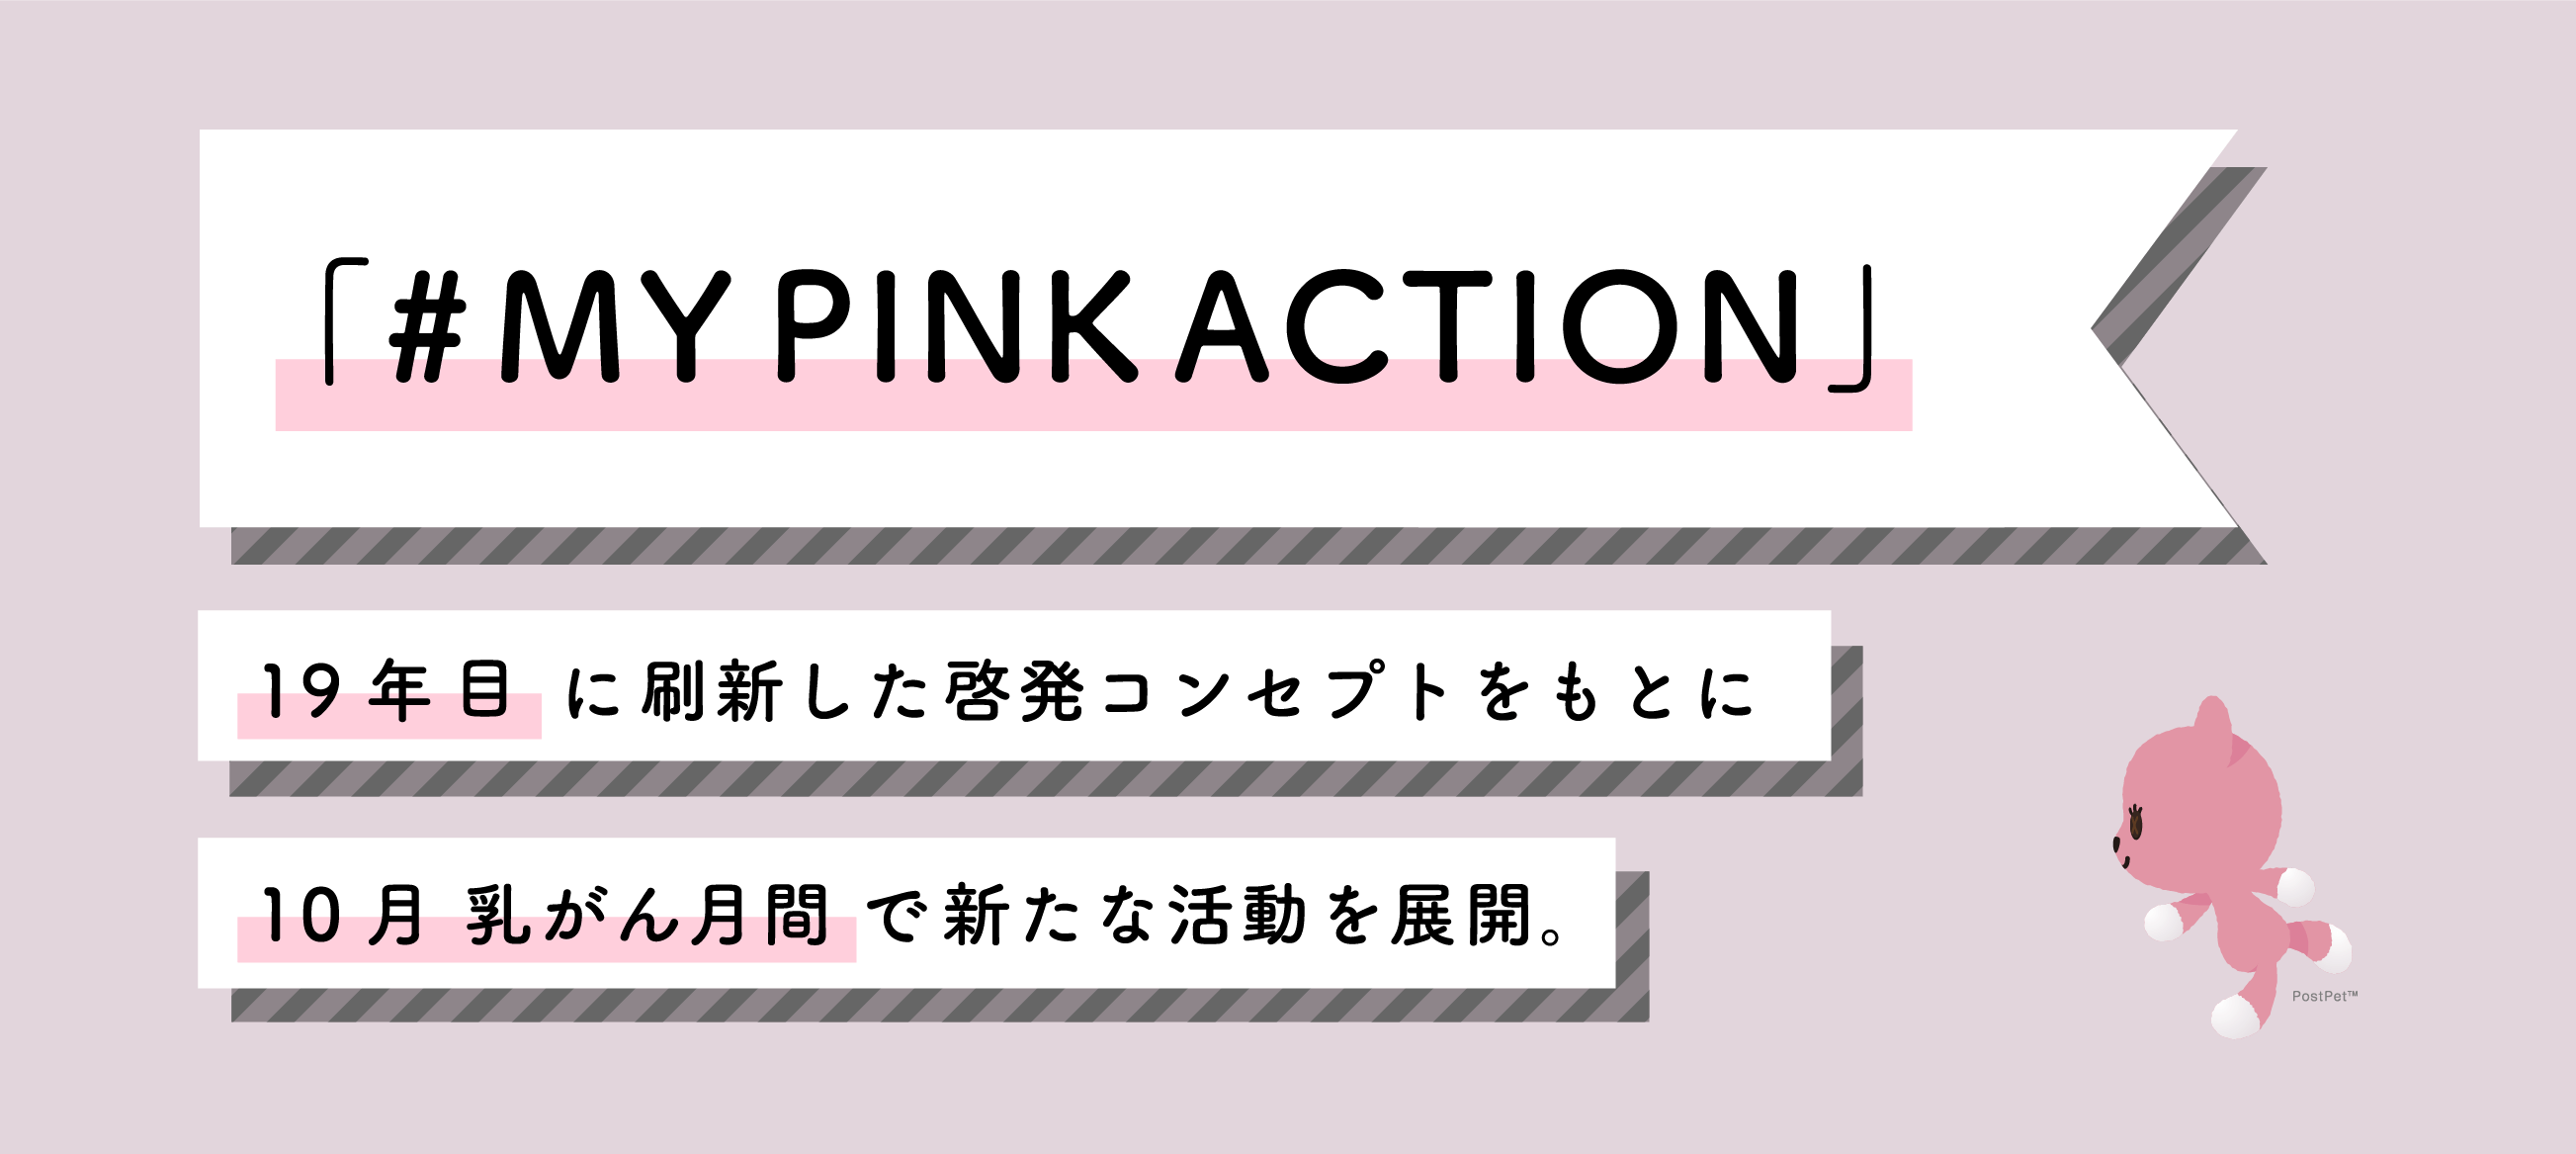 MY PINK ACTION - 取り組み  ピンクリボンフェスティバル公式サイト